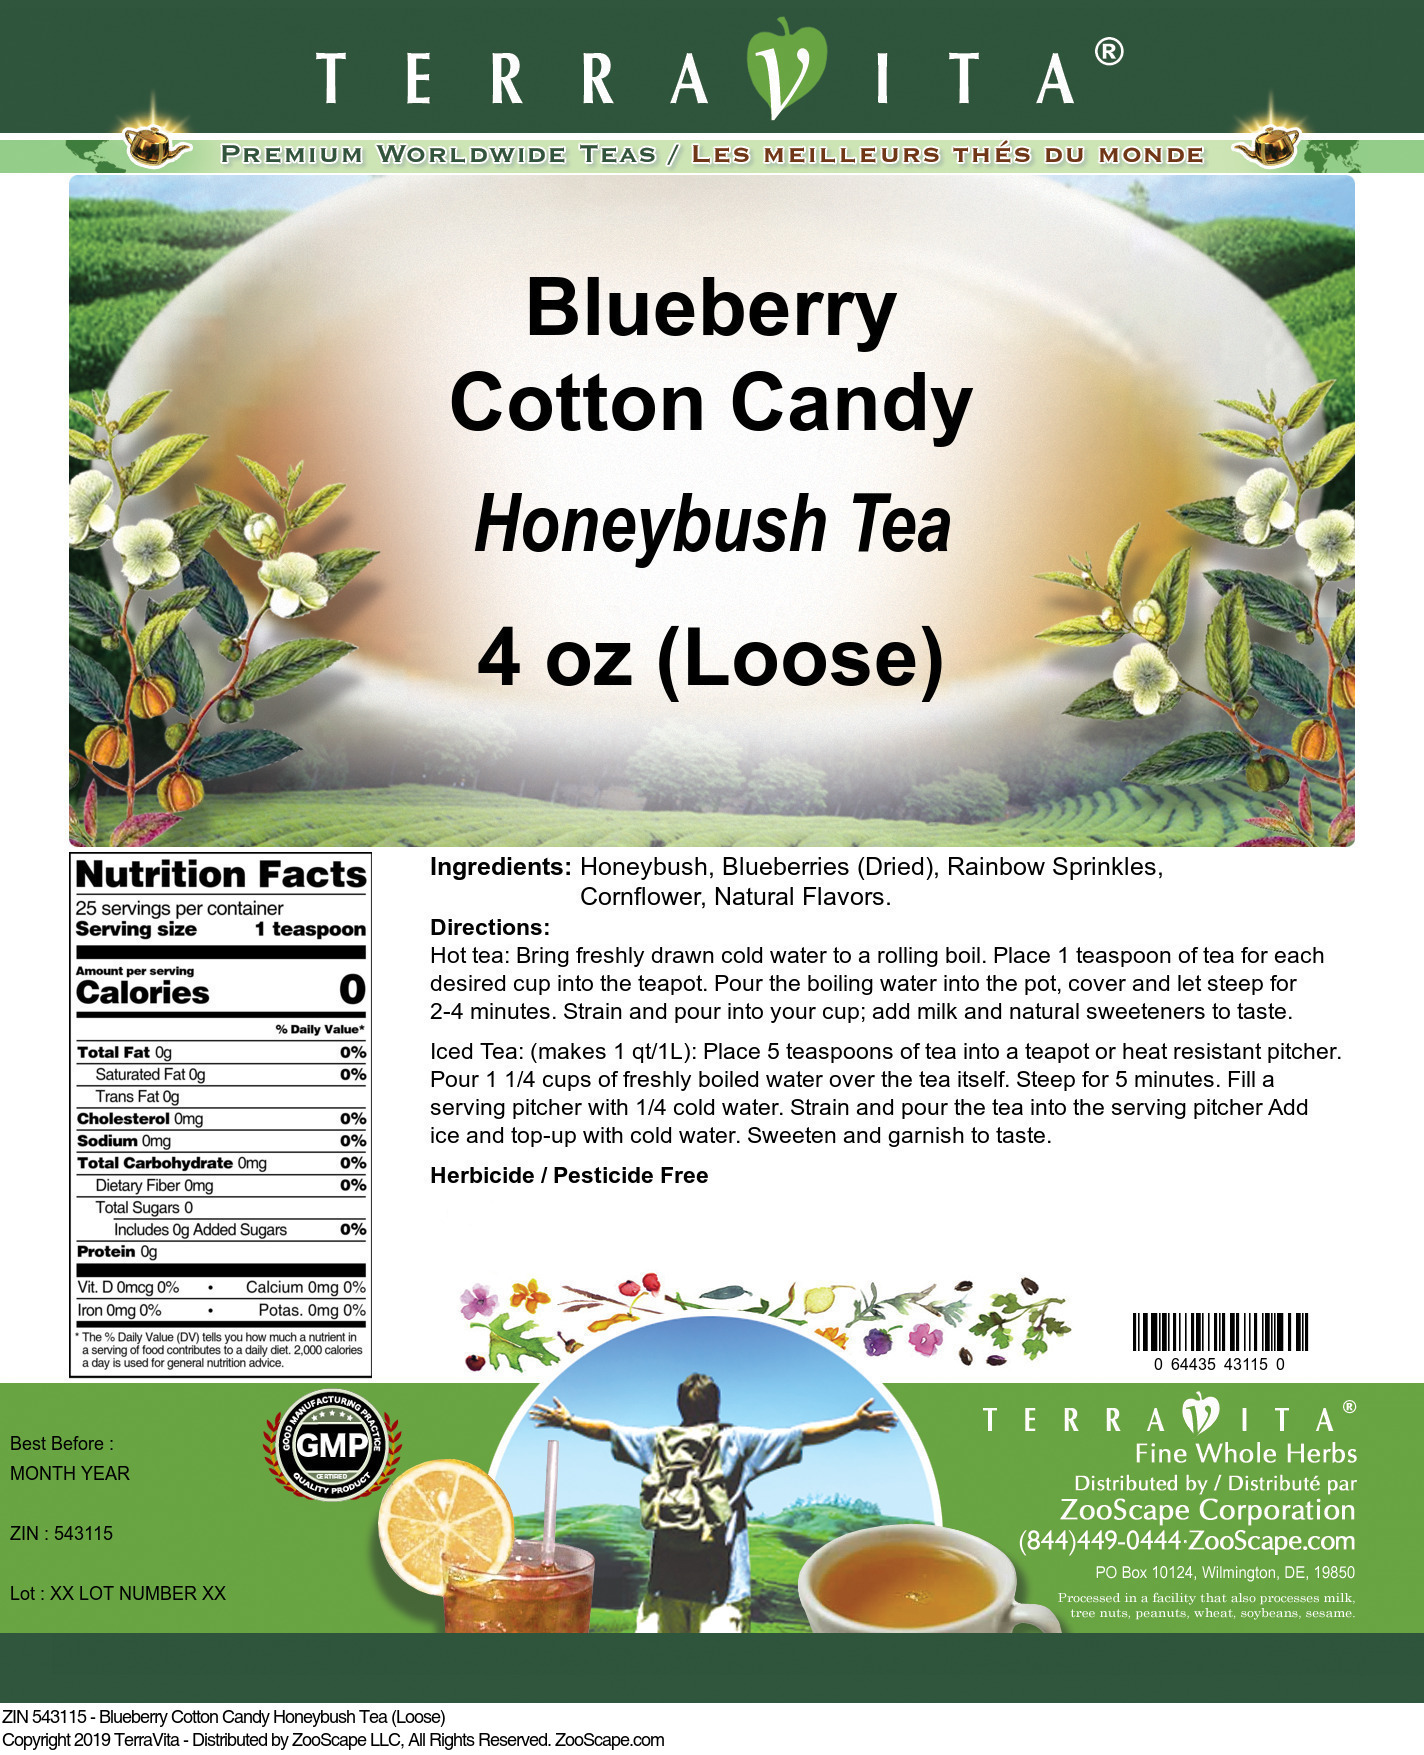 Blueberry Cotton Candy Honeybush Tea (Loose) - Label